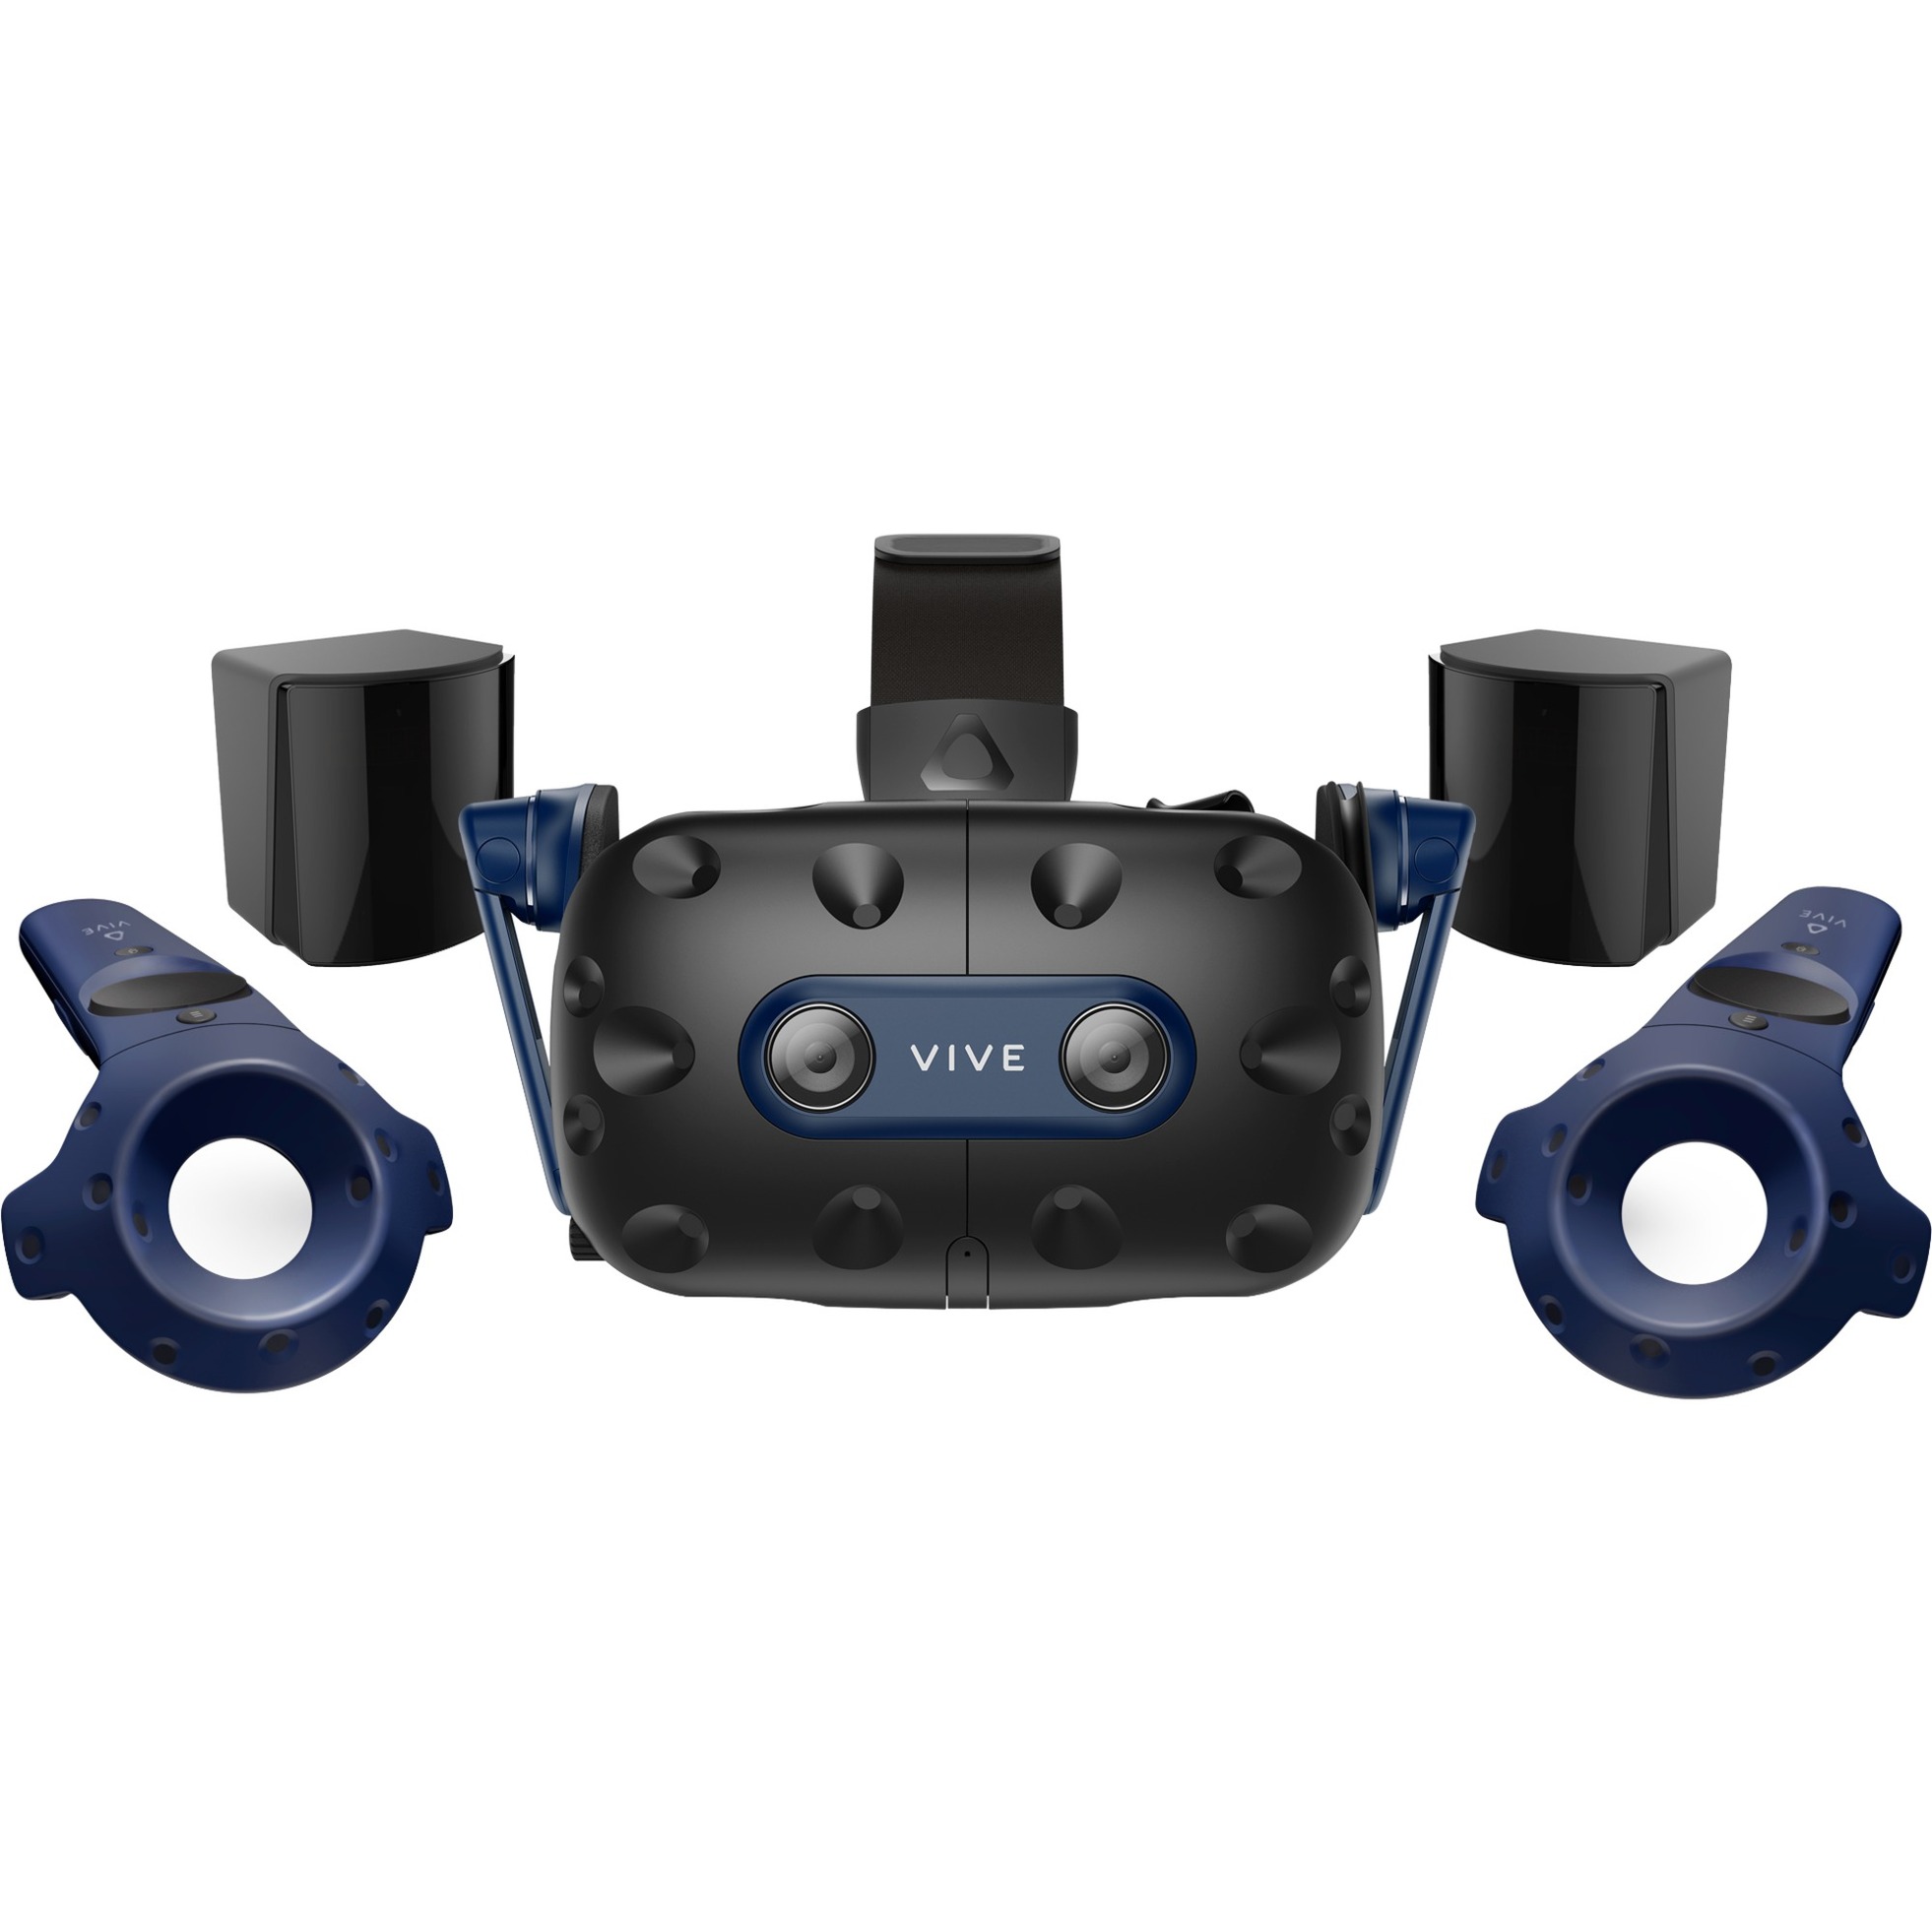 Image of Alternate - Vive Pro 2 Full Kit, VR-Brille online einkaufen bei Alternate